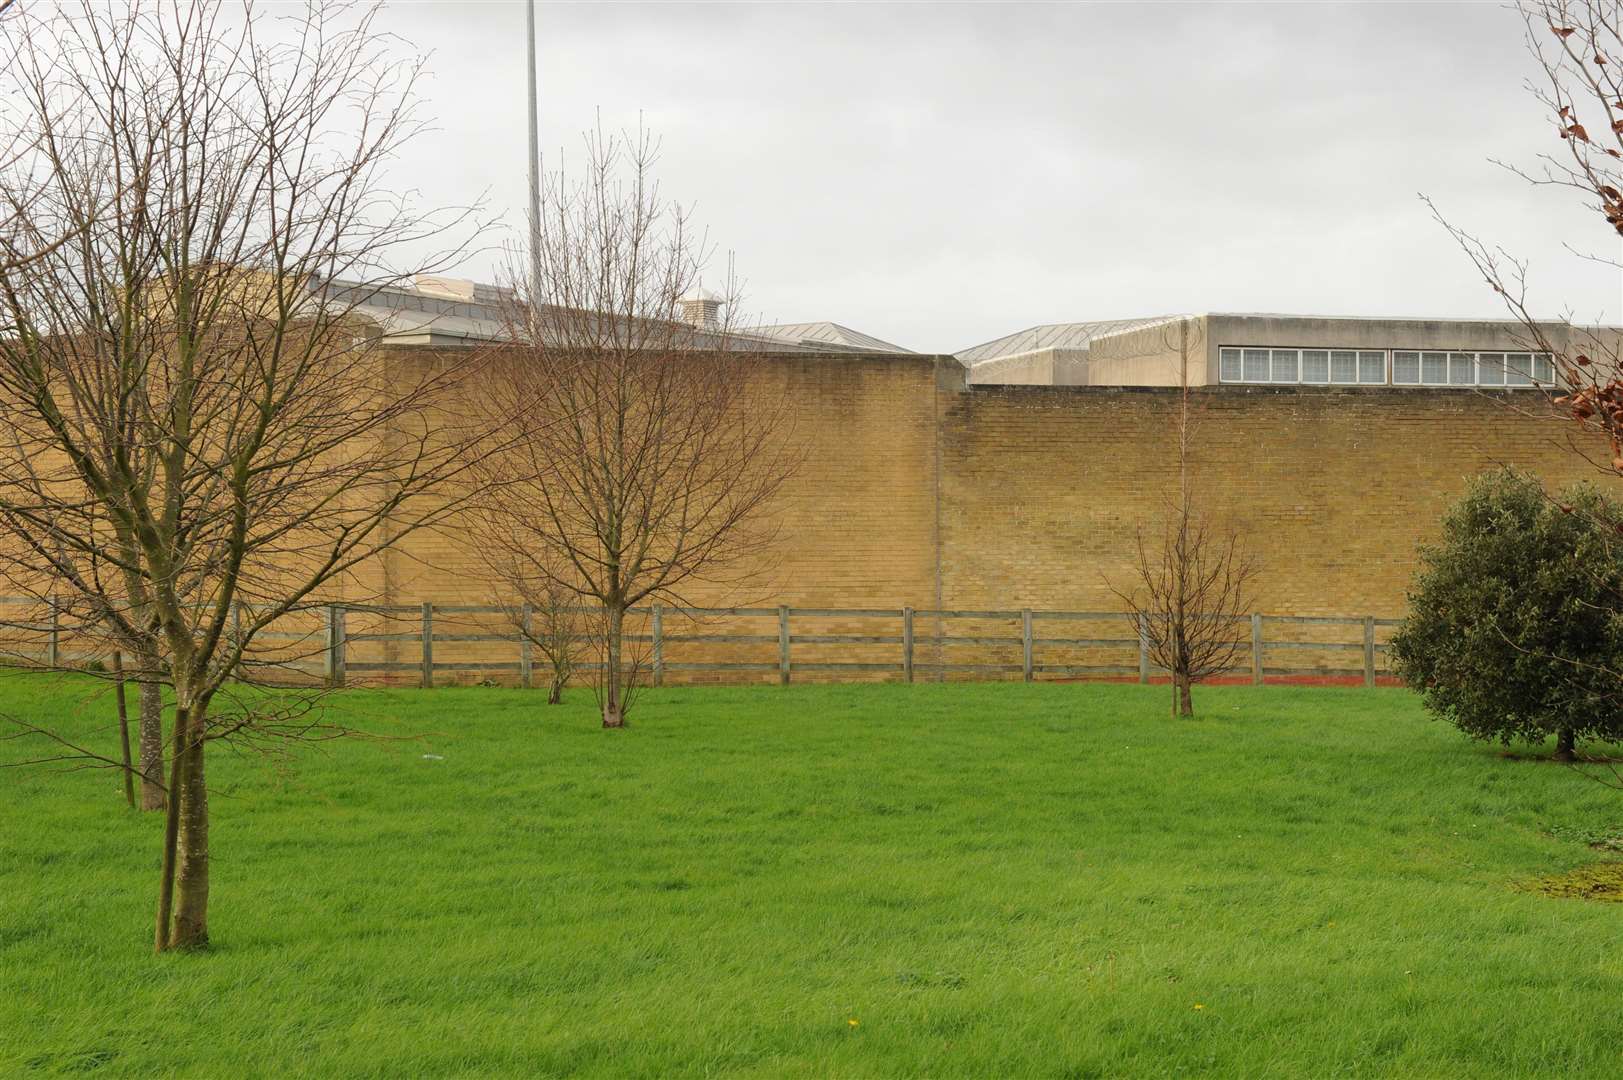 Prison complex, off, Sir Evelyn Road. Rochester.Picture: Steve Crispe FM4172592 (4062762)